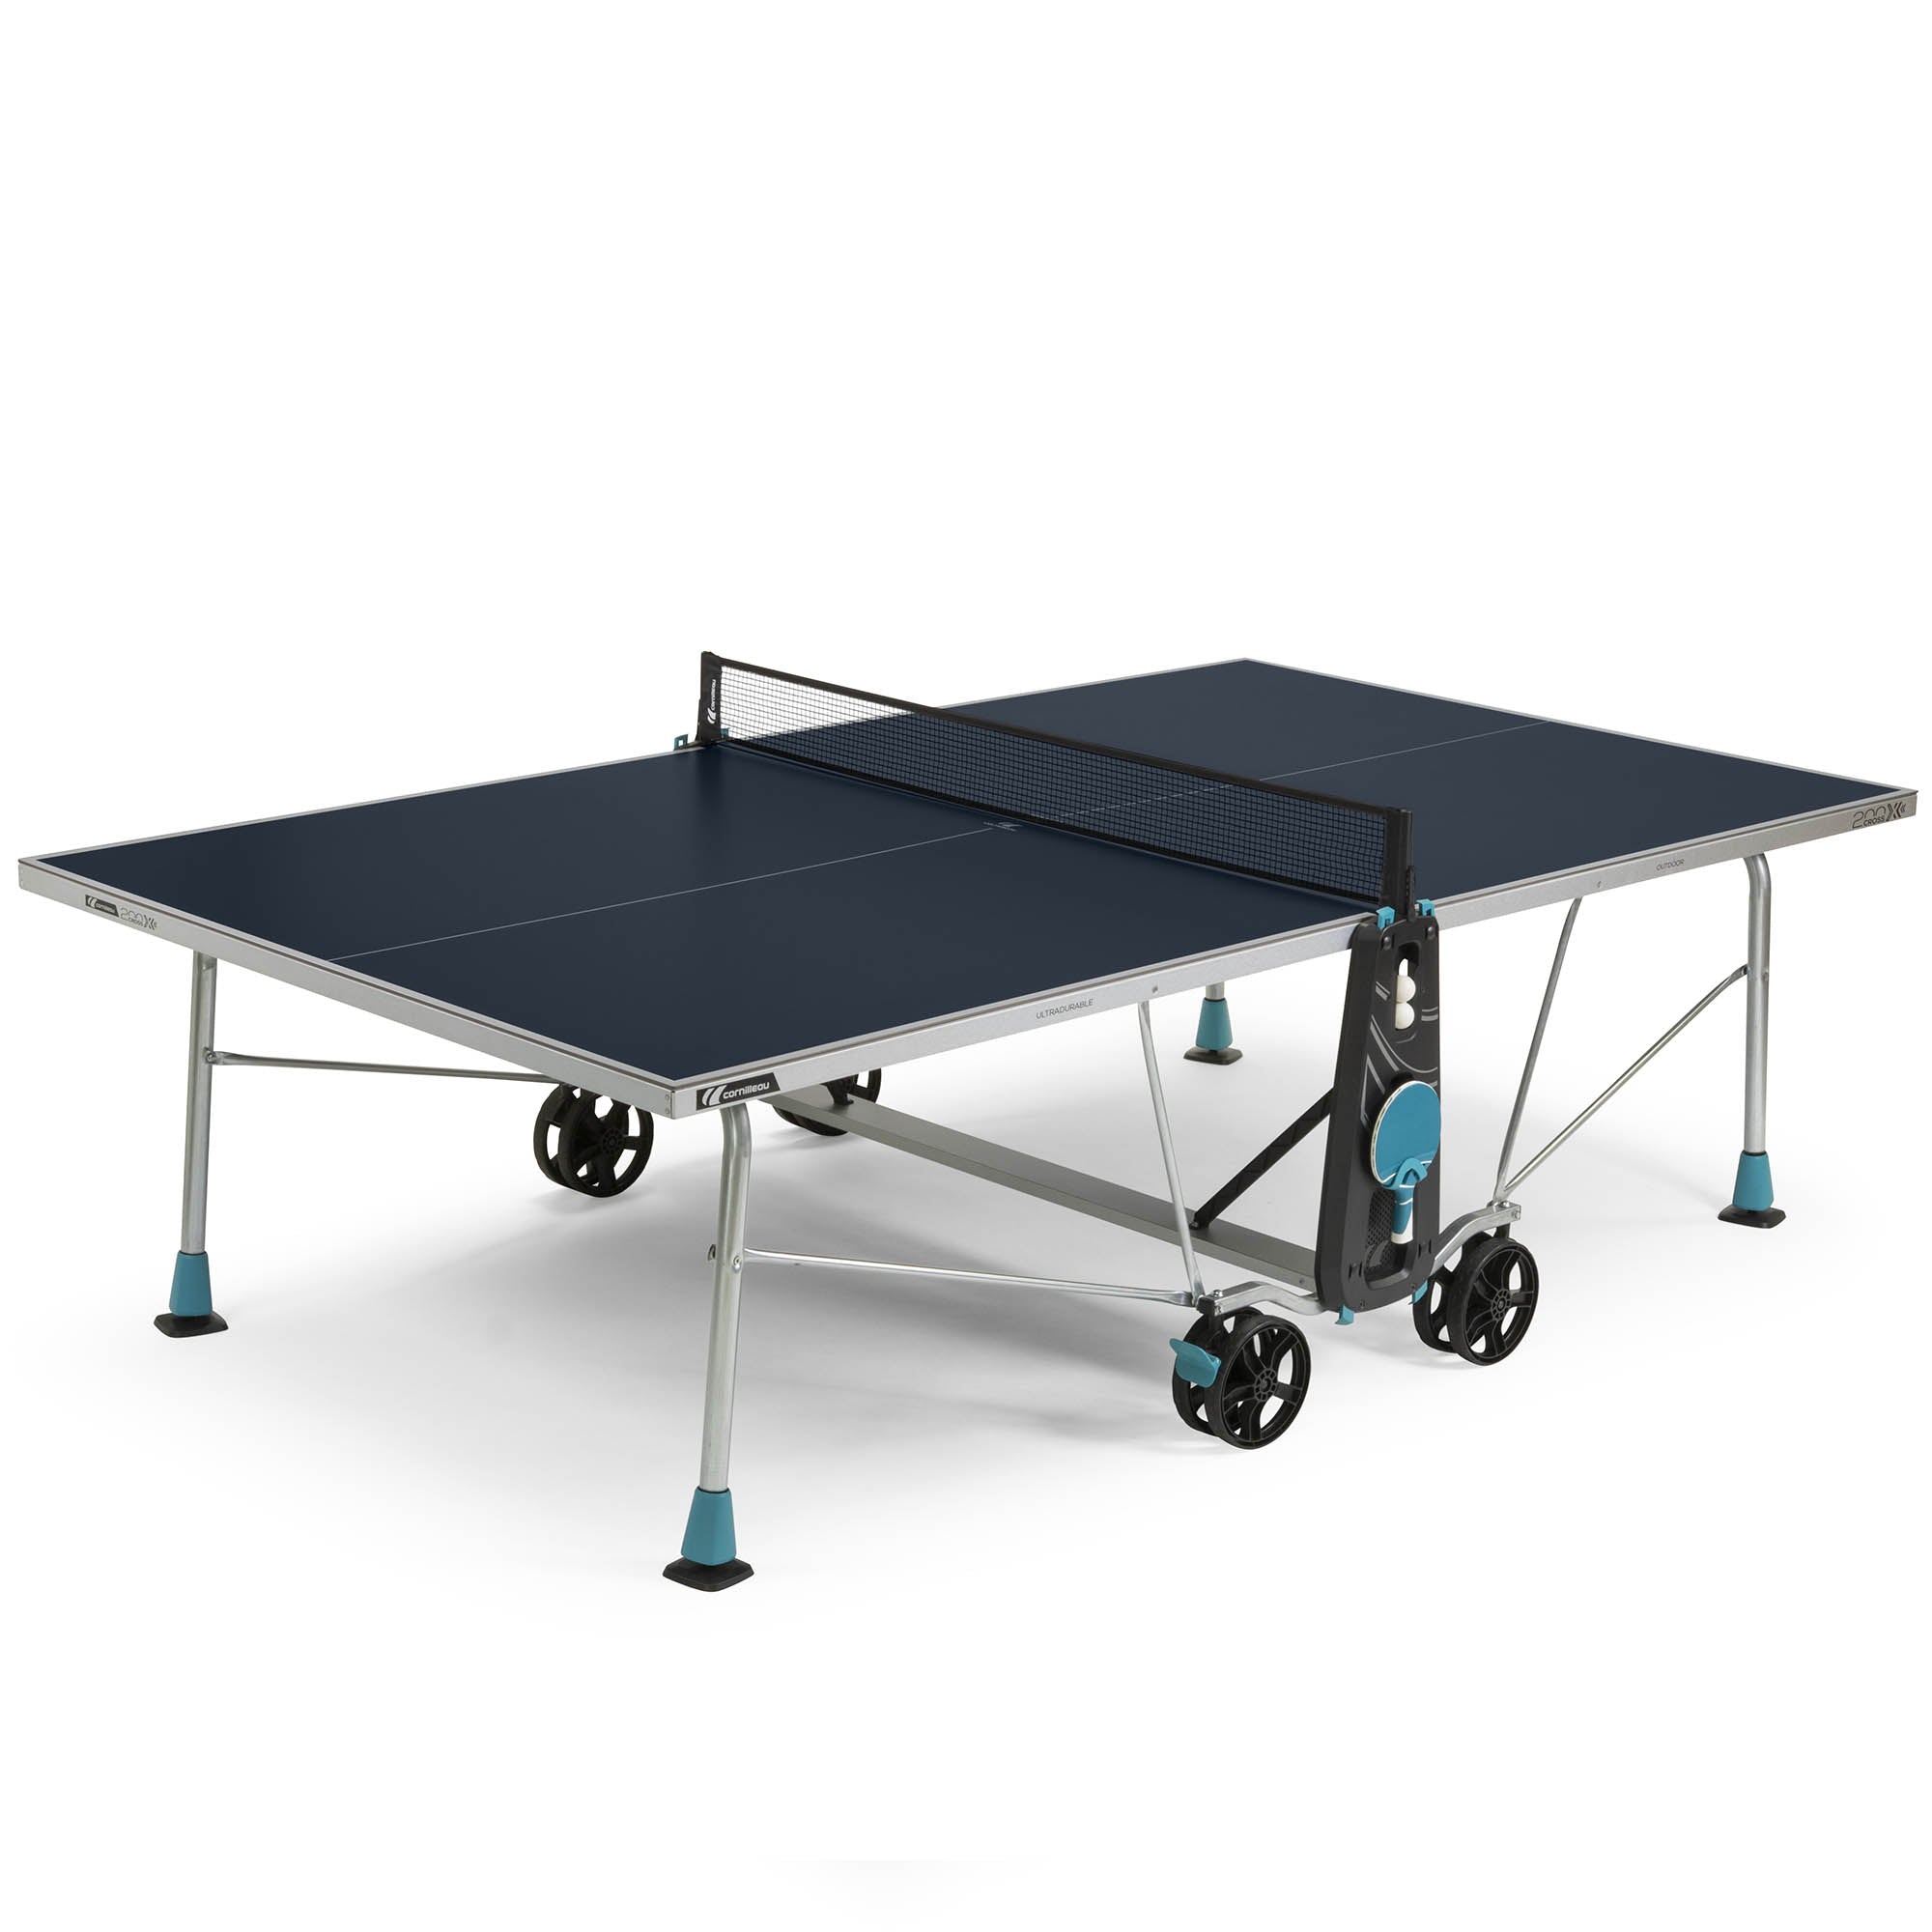 Cornilleau Sport 200X Rollaway Outdoor Table Tennis Table